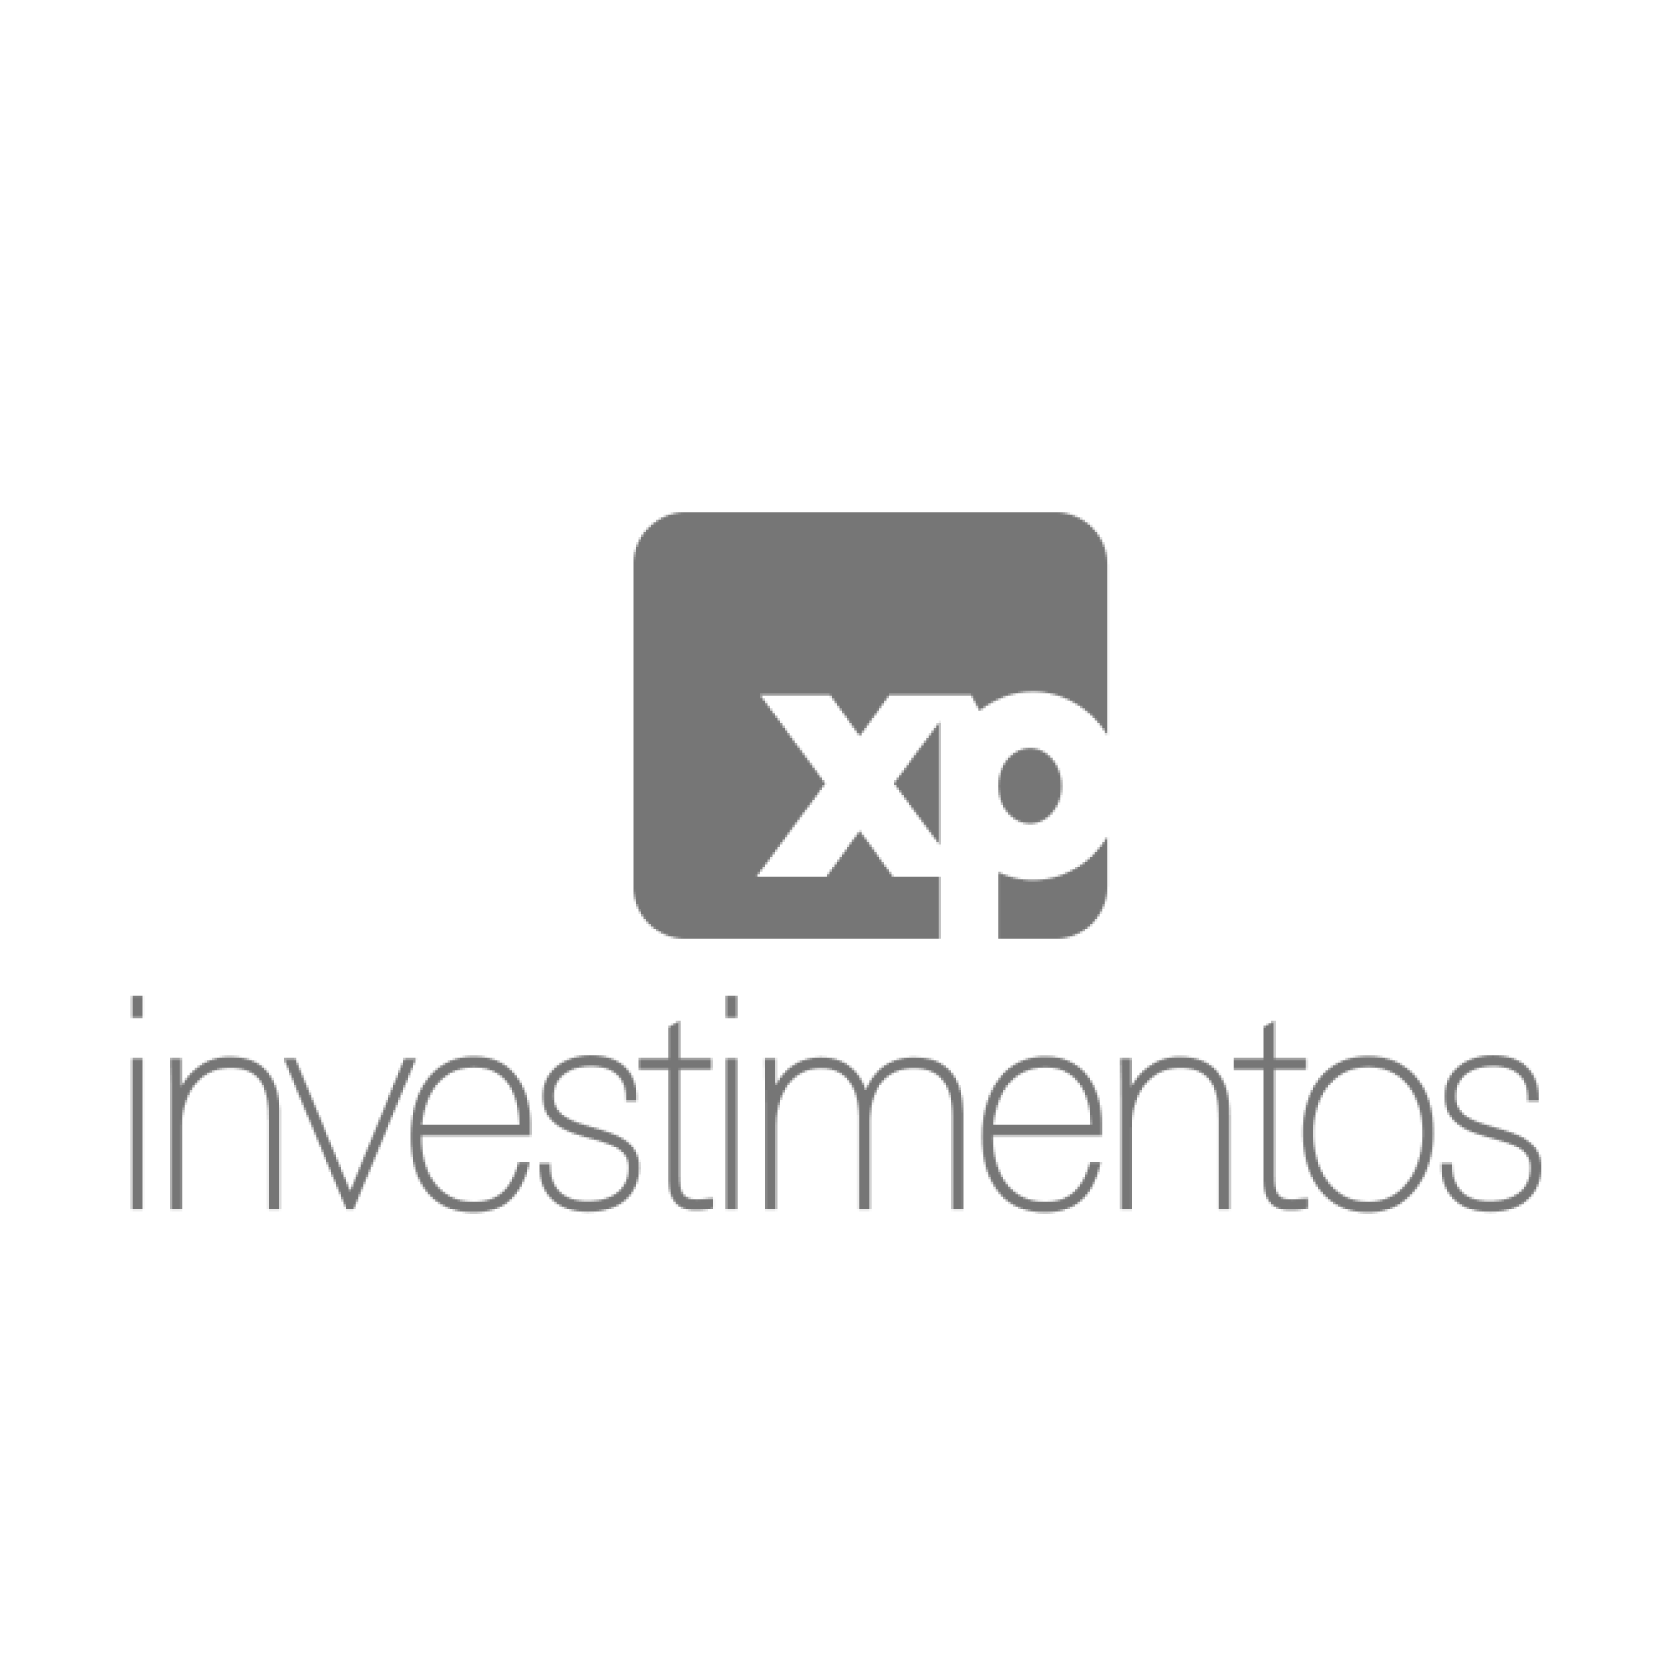 XP Investimentos-01